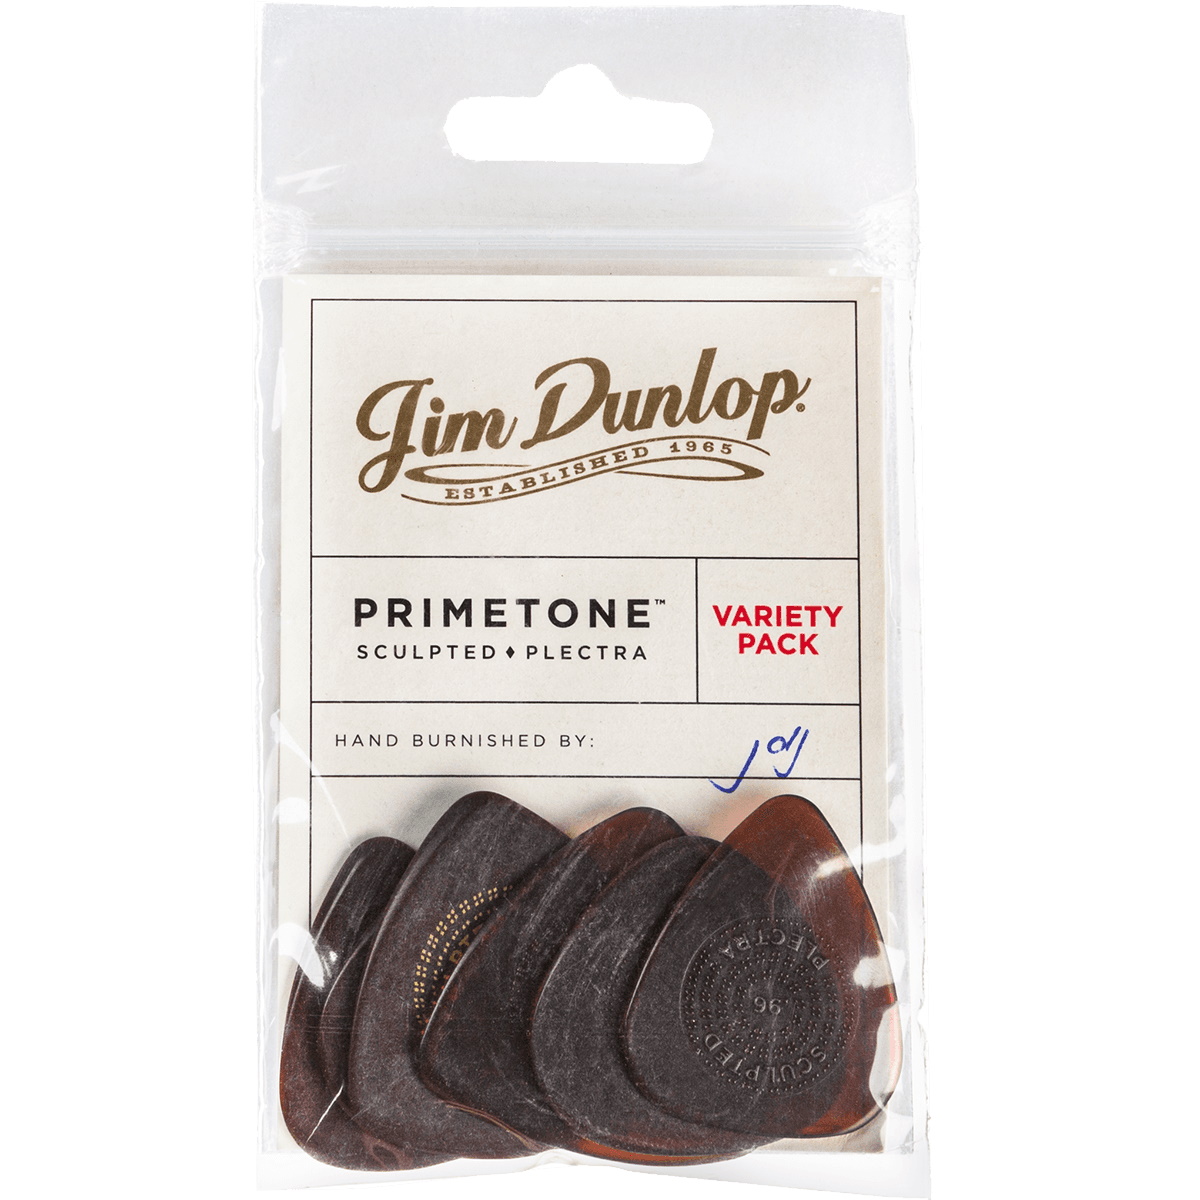 Dunlop Variety Pack PVP Primetone